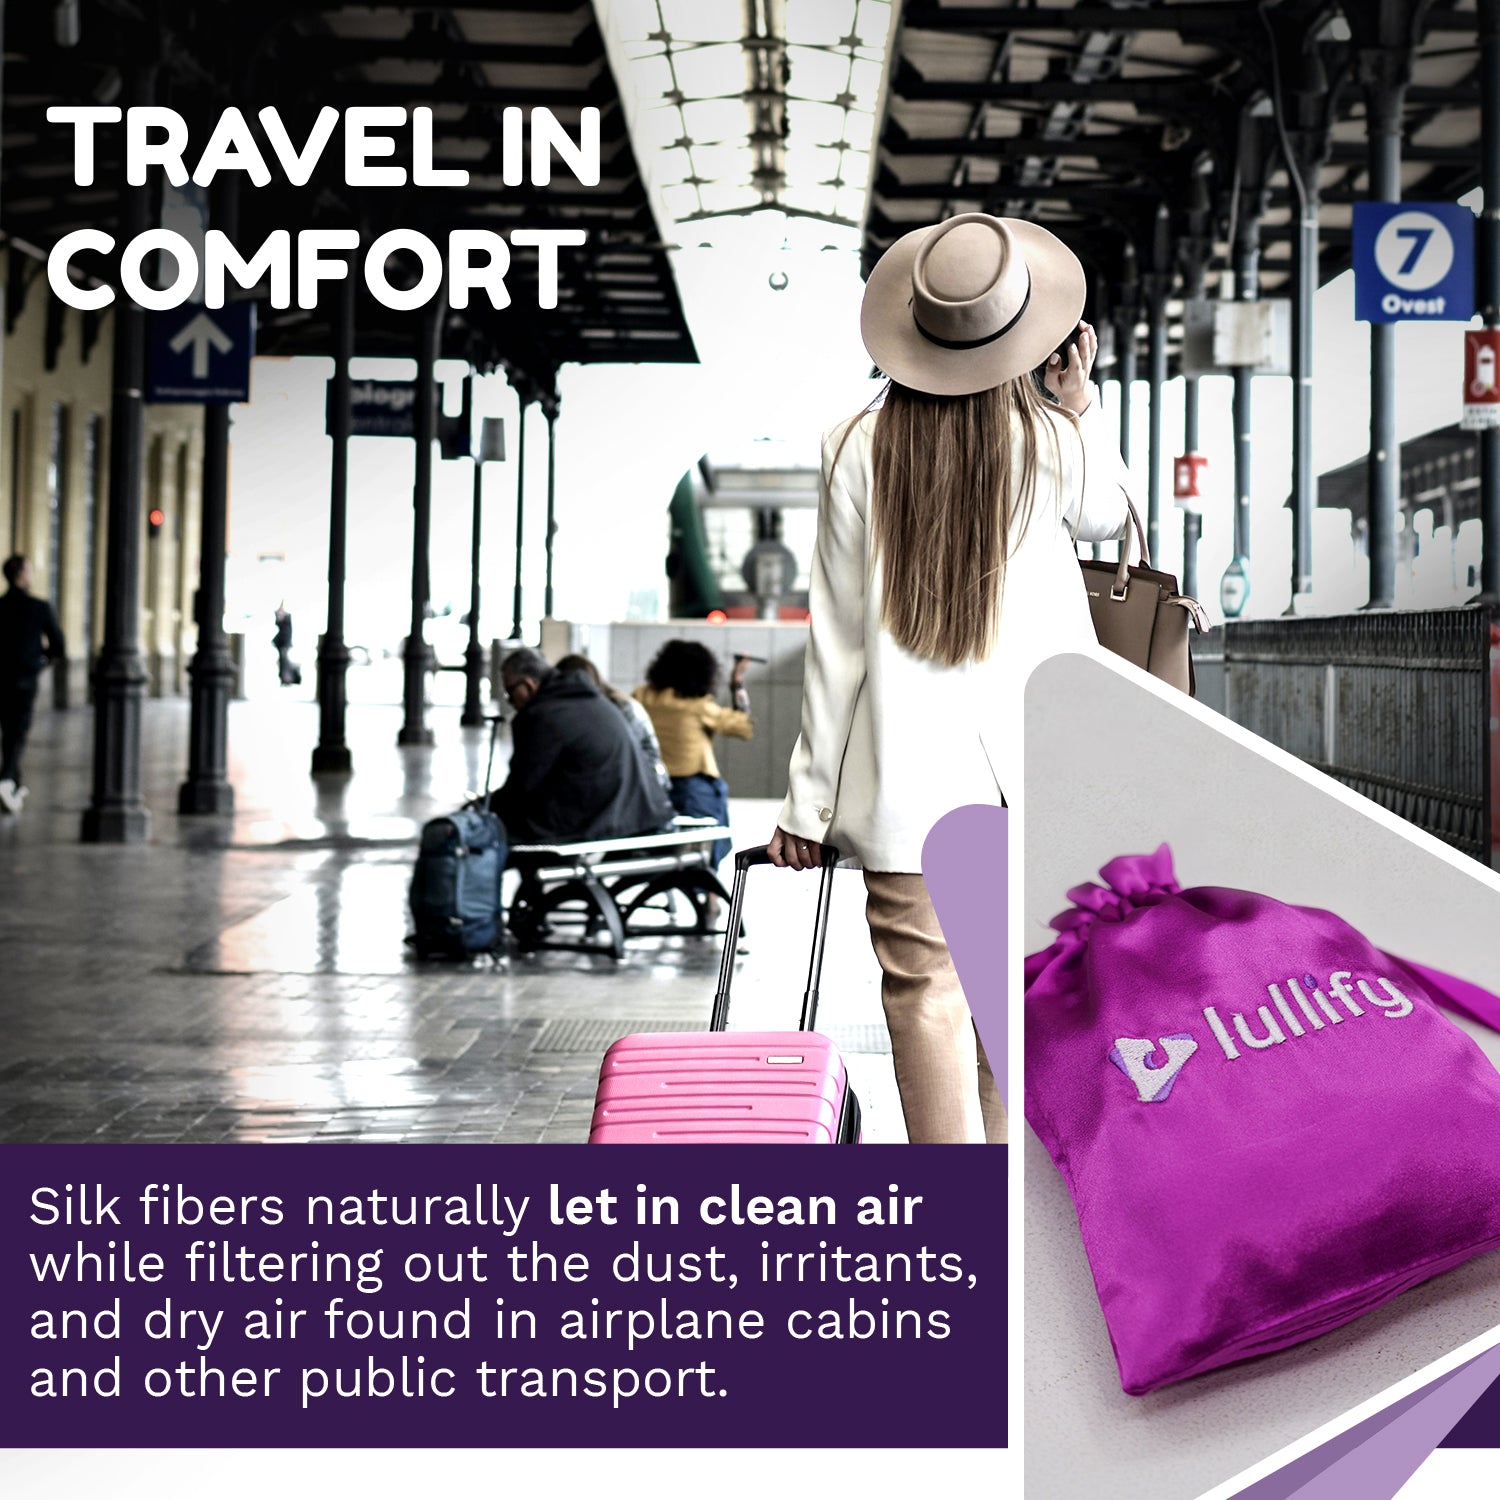 Lullify Travel Kit, Yoga Mat With Carrying Bag & Silk Sleeping Mask